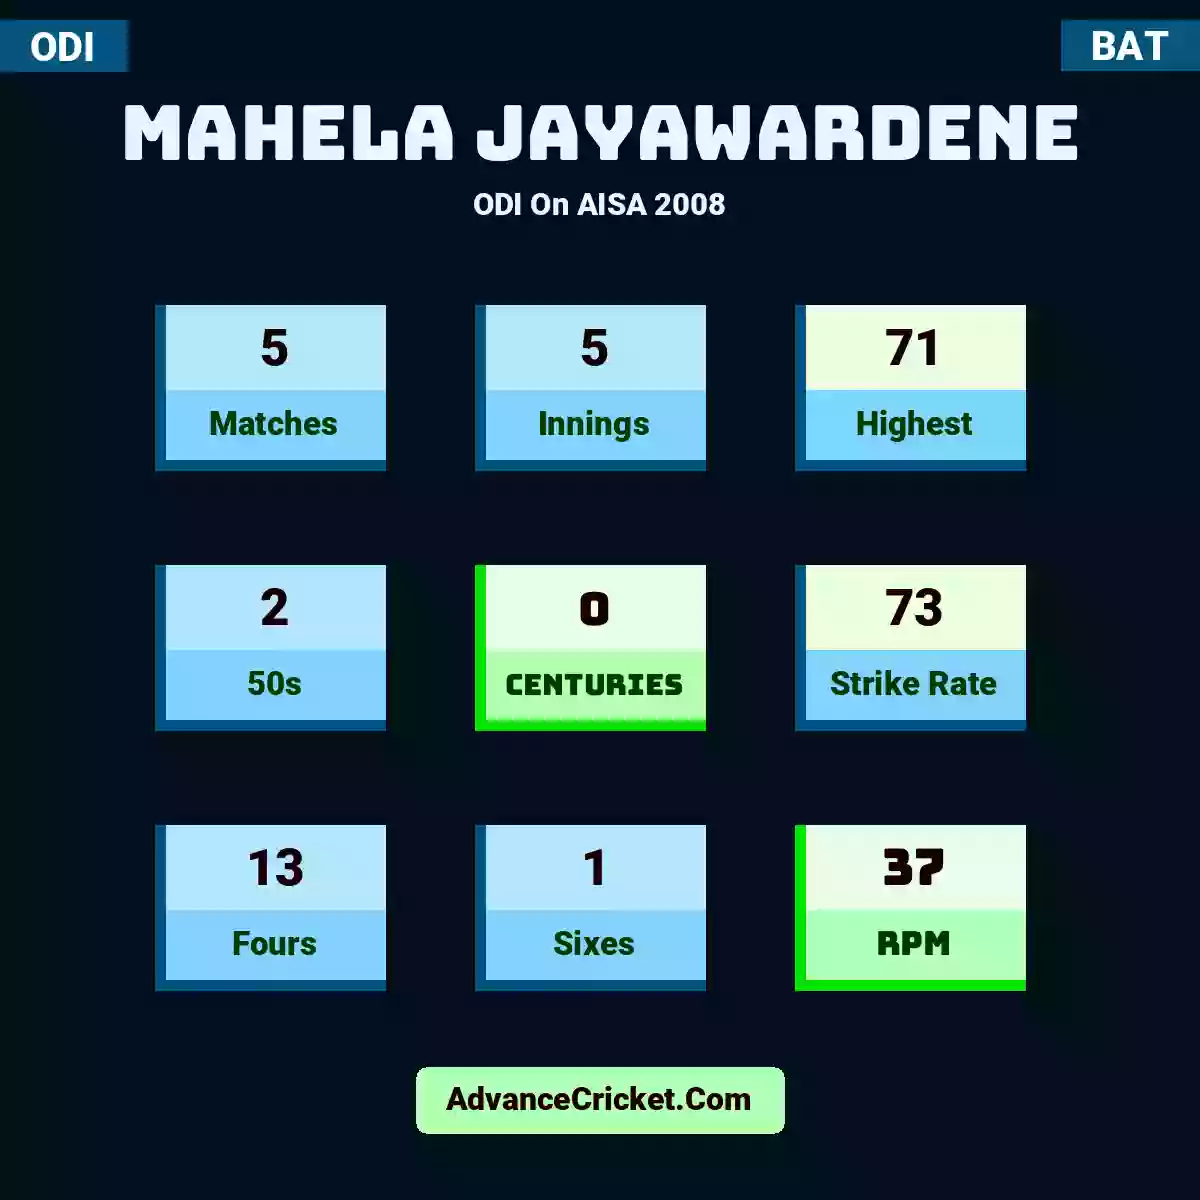 Mahela Jayawardene ODI  On AISA 2008, Mahela Jayawardene played 5 matches, scored 71 runs as highest, 2 half-centuries, and 0 centuries, with a strike rate of 73. M.Jayawardene hit 13 fours and 1 sixes, with an RPM of 37.